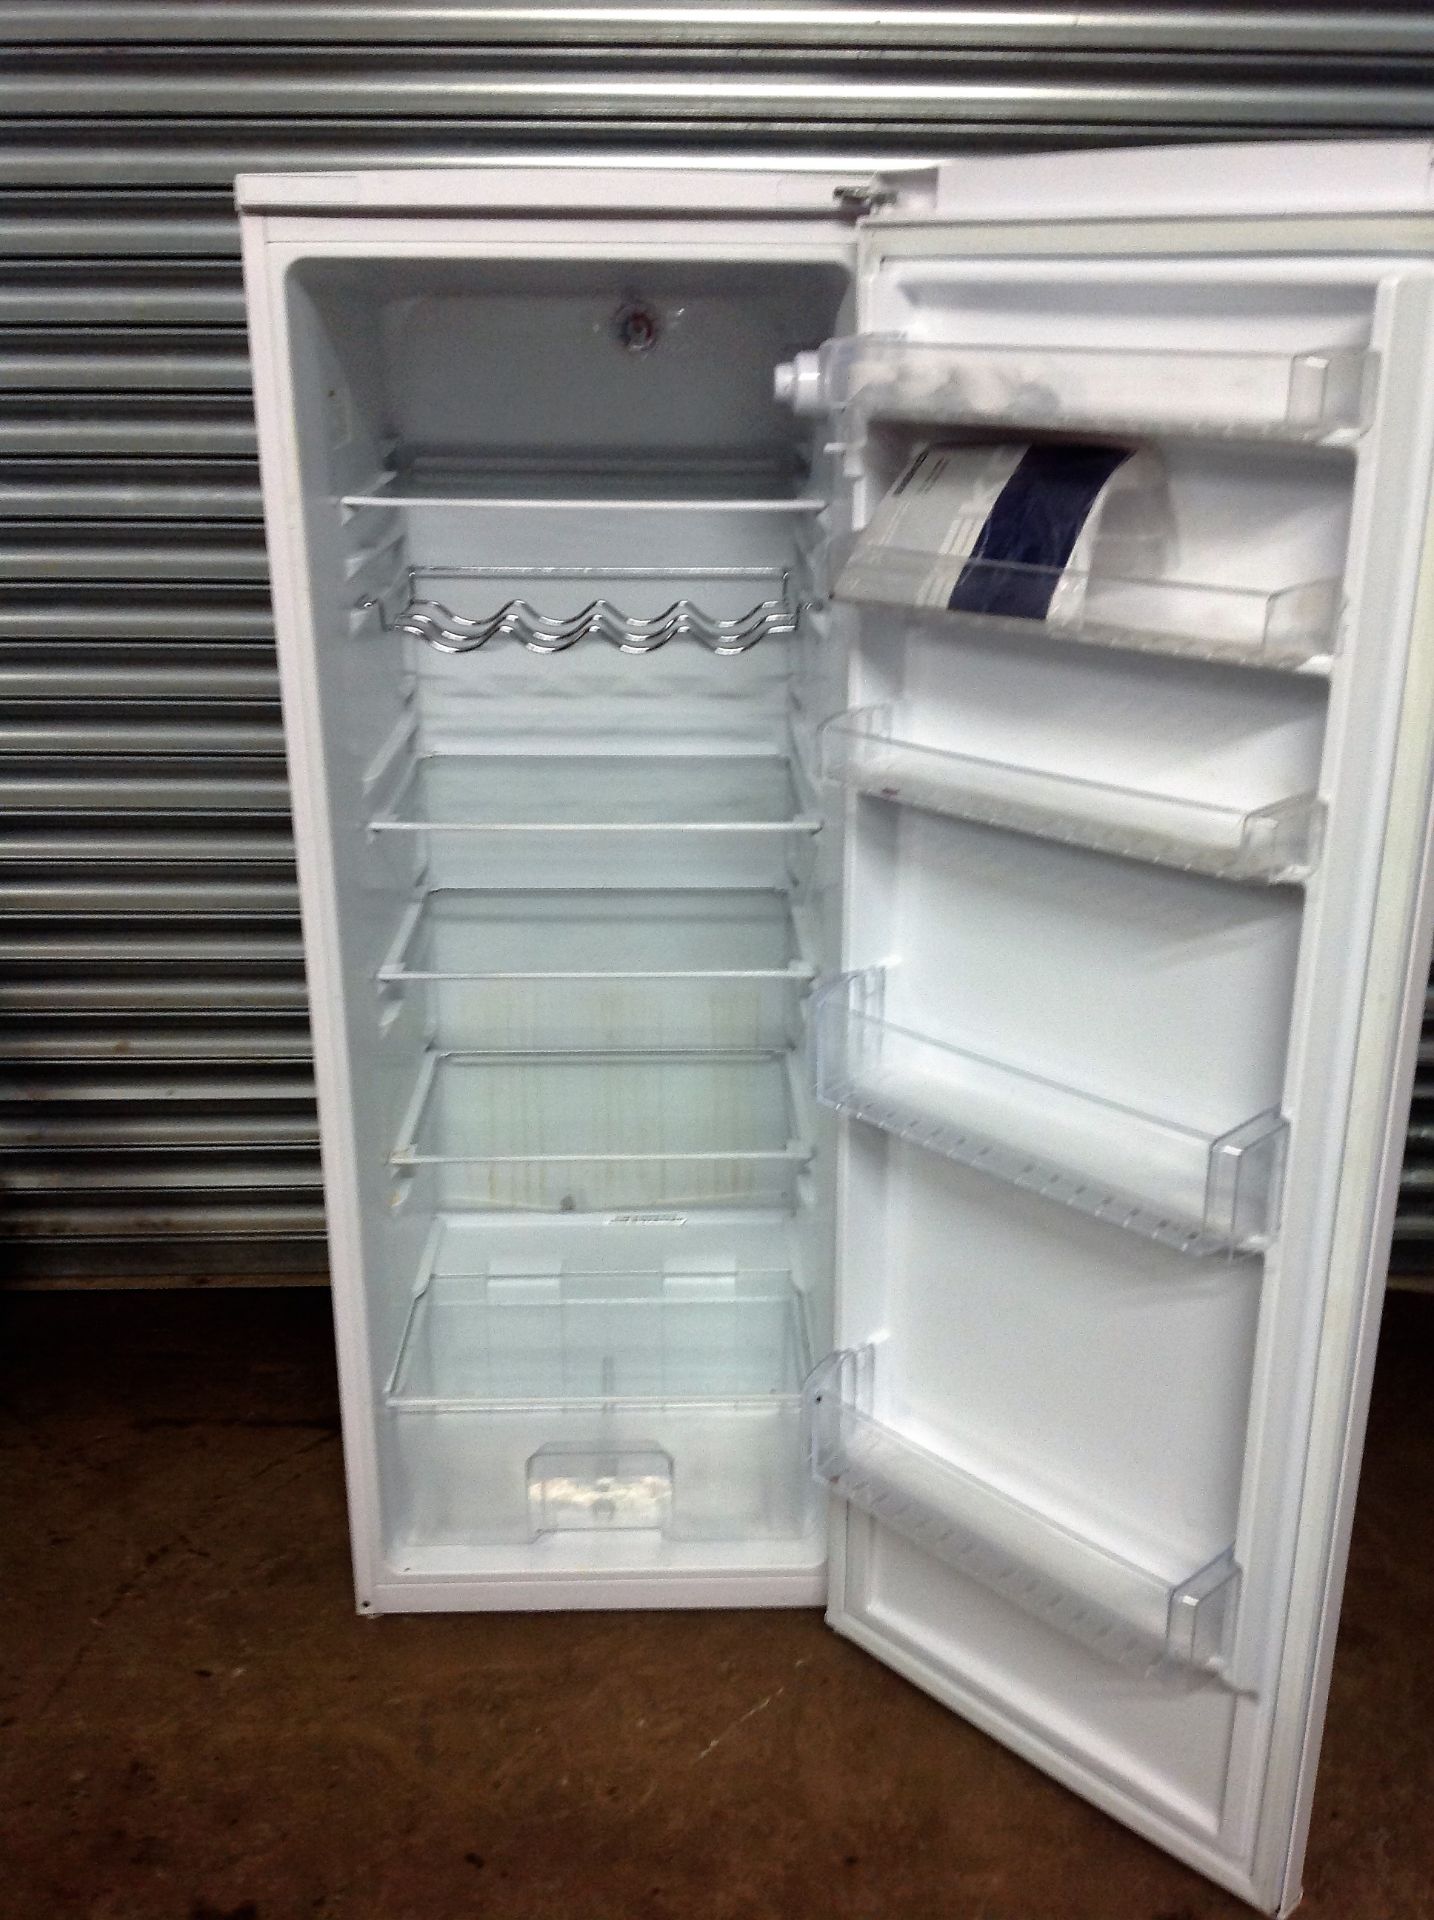 Beko Domestic White Refrigerator -Model: L54261 / B270U - H: 145cm W: 55cm D: 54cm - Image 2 of 3